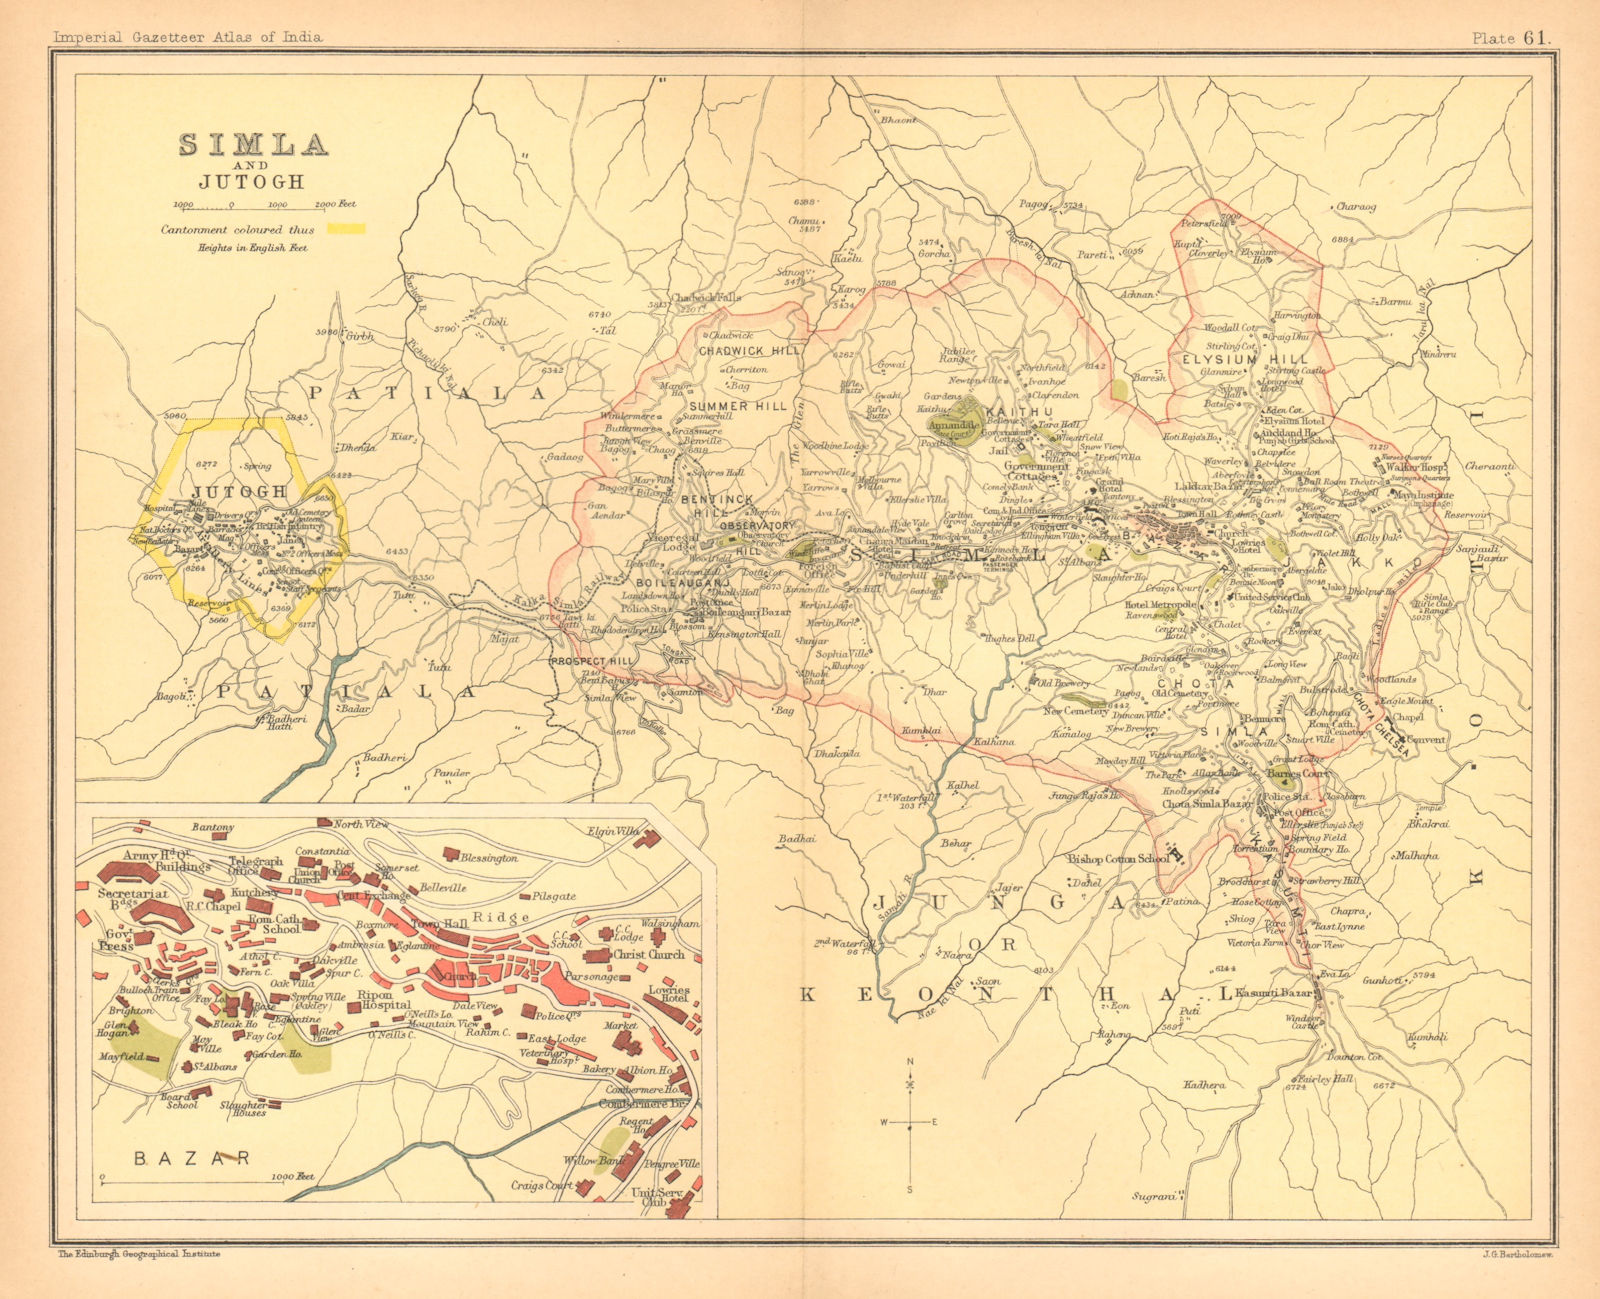 Simla/Shimla & Jutogh cantonment. Lakkar Bazaar. British India 1909 old map